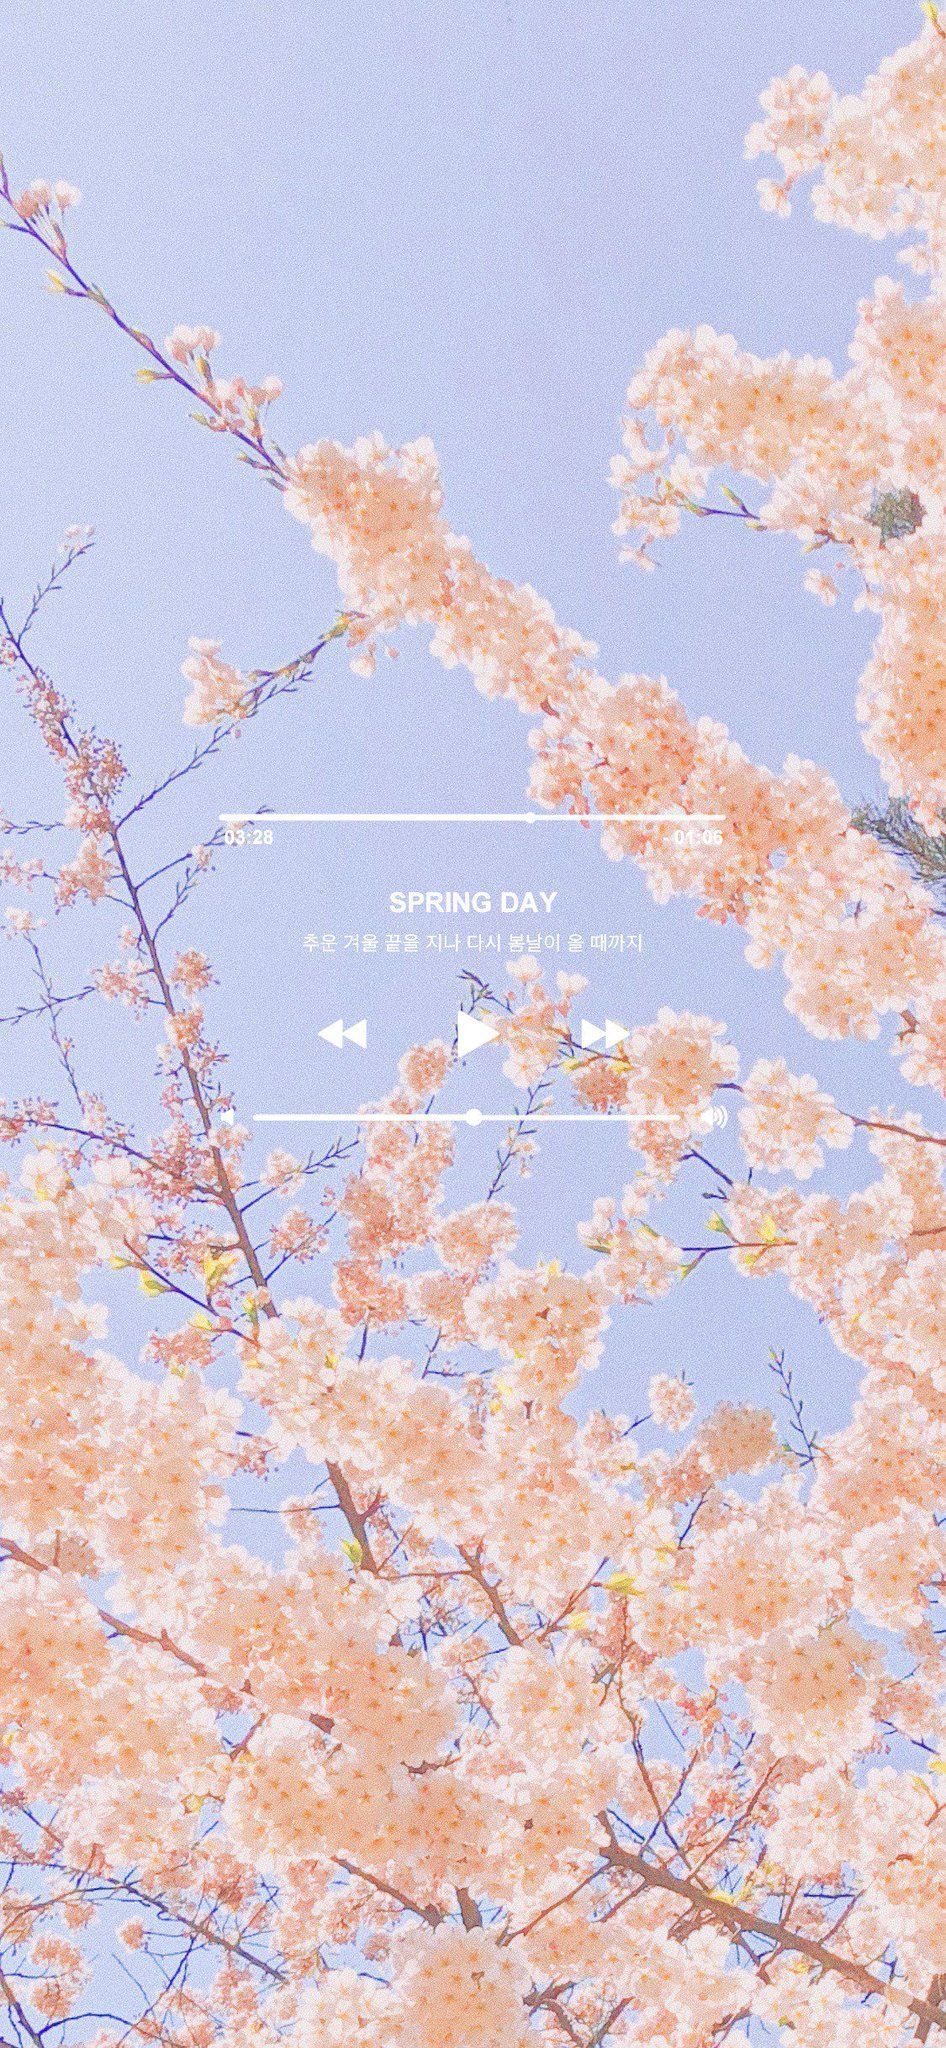 Spring Day Aesthetic Wallpaper